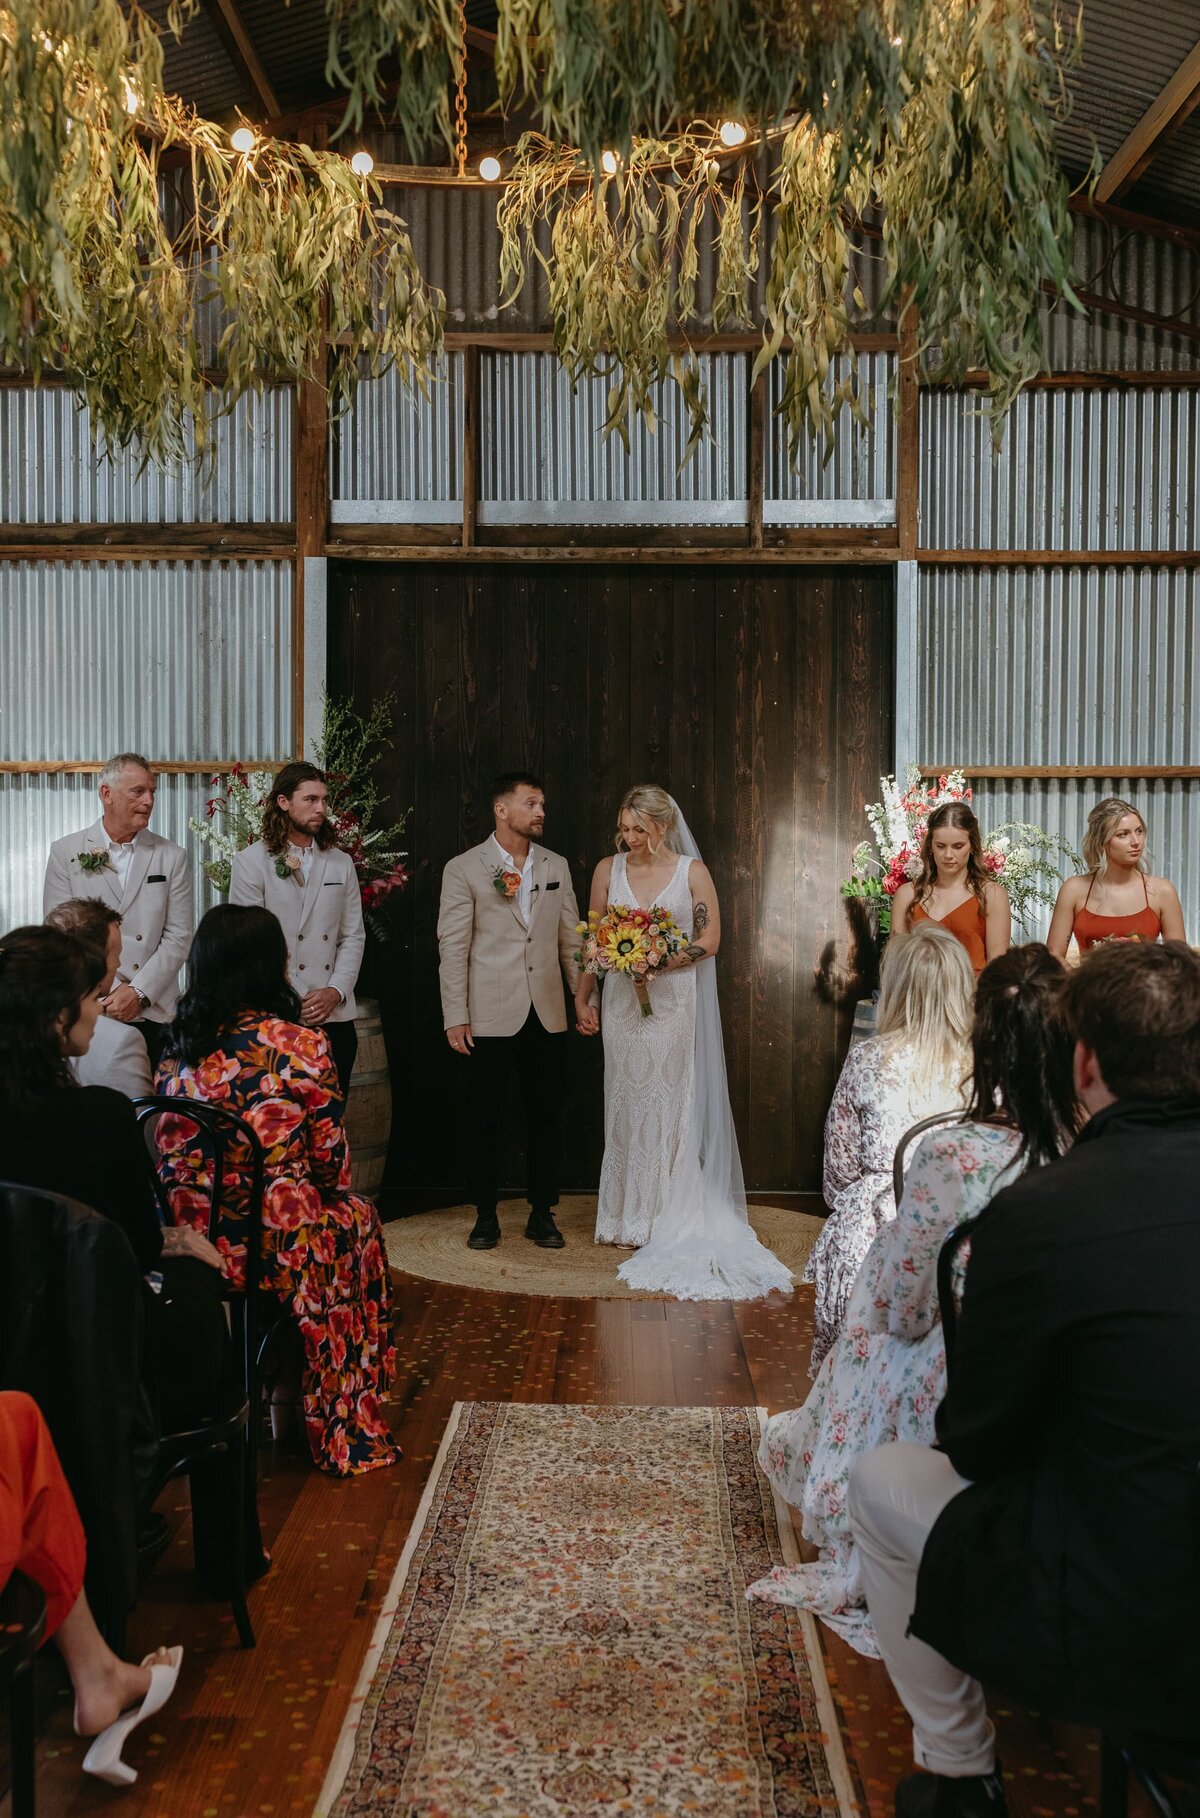 Melbourne wedding photographer Jen Tighe for Zach & Tash's wedding